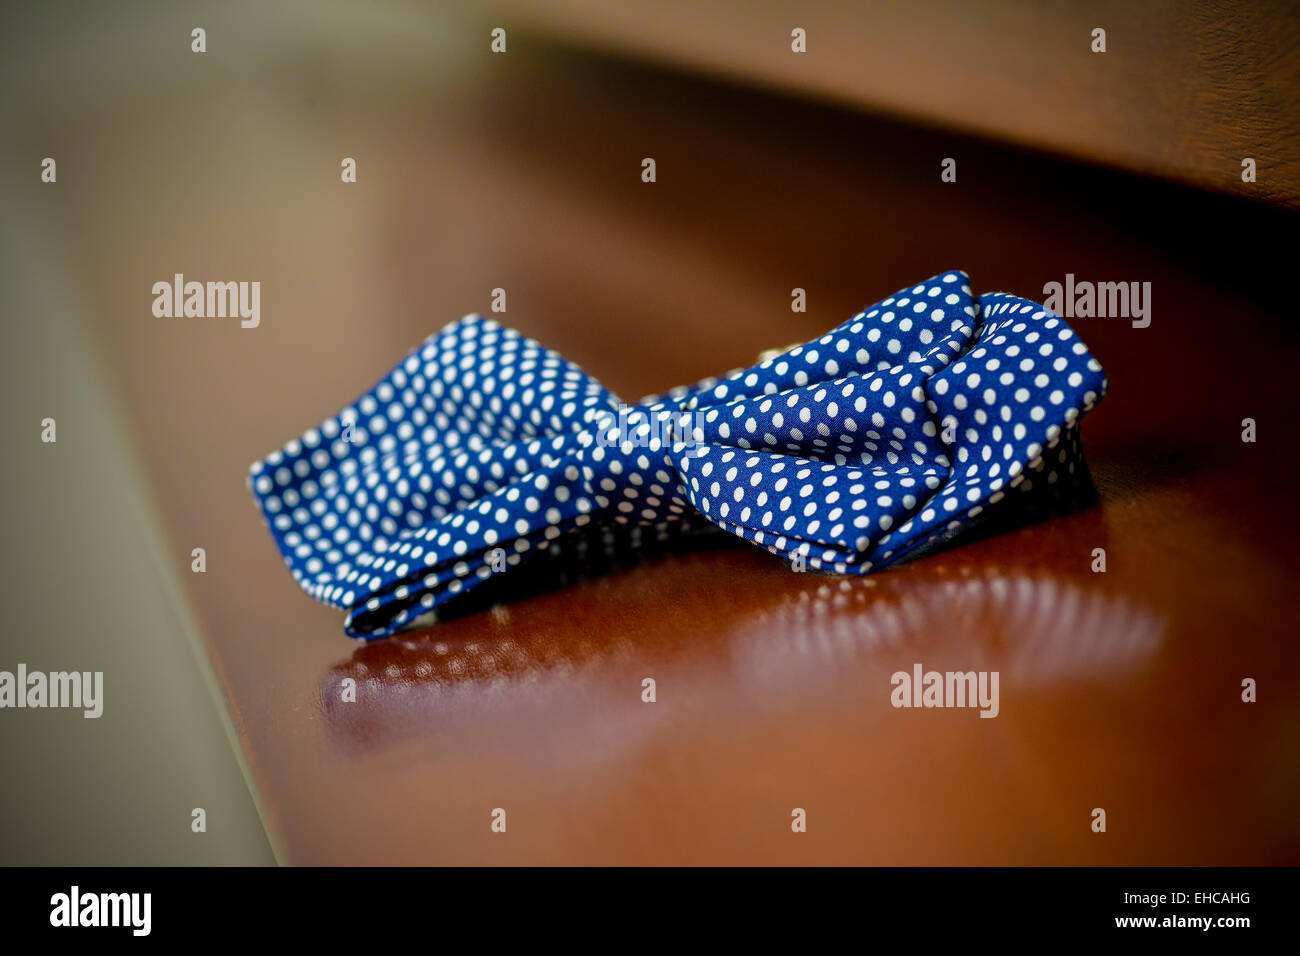 Blue bow tie with polka dots Stock Photo - Alamy